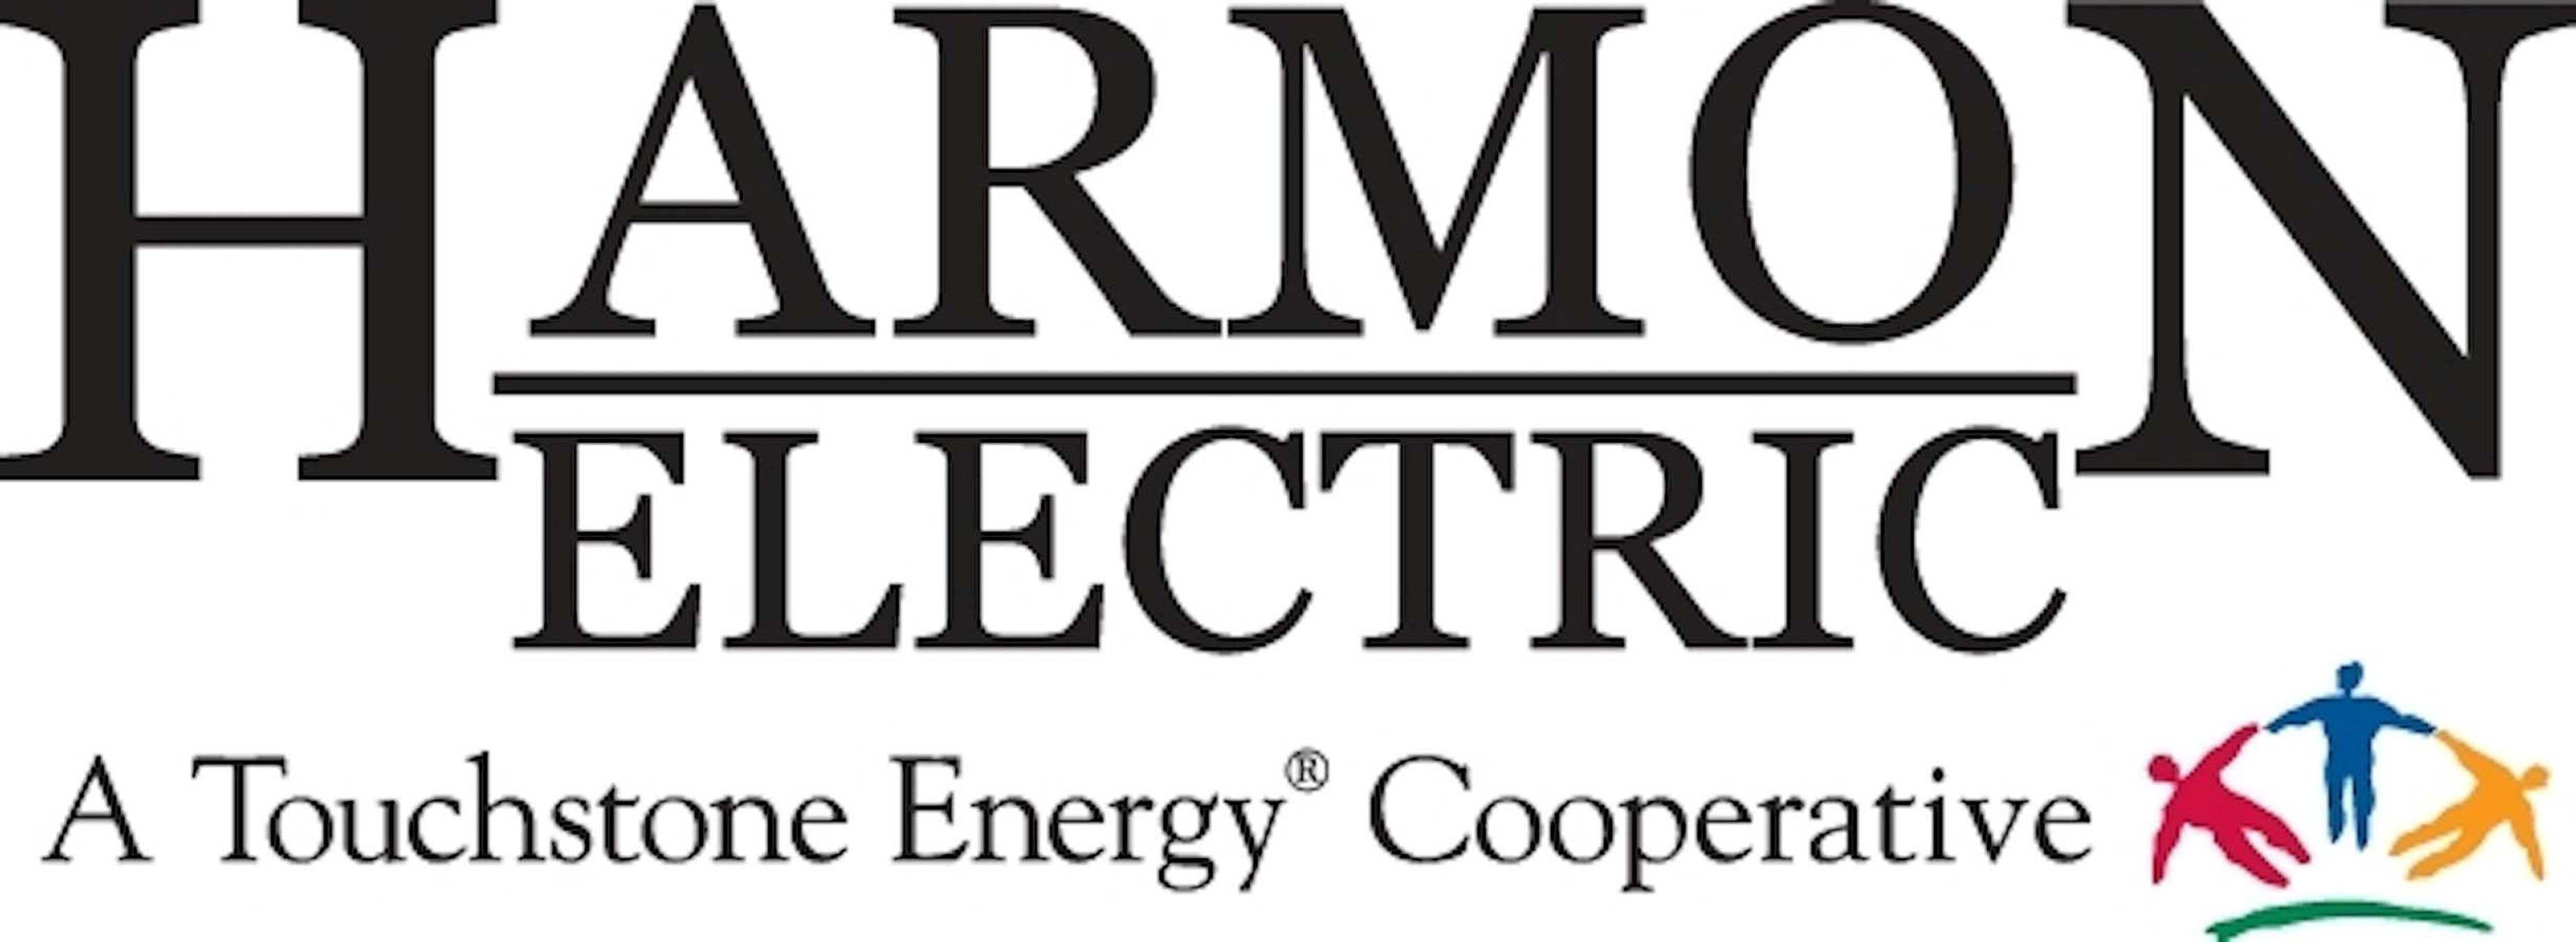 Harmon Logo - Welcome to Harmon Electric | Harmon Electric Association, Inc.